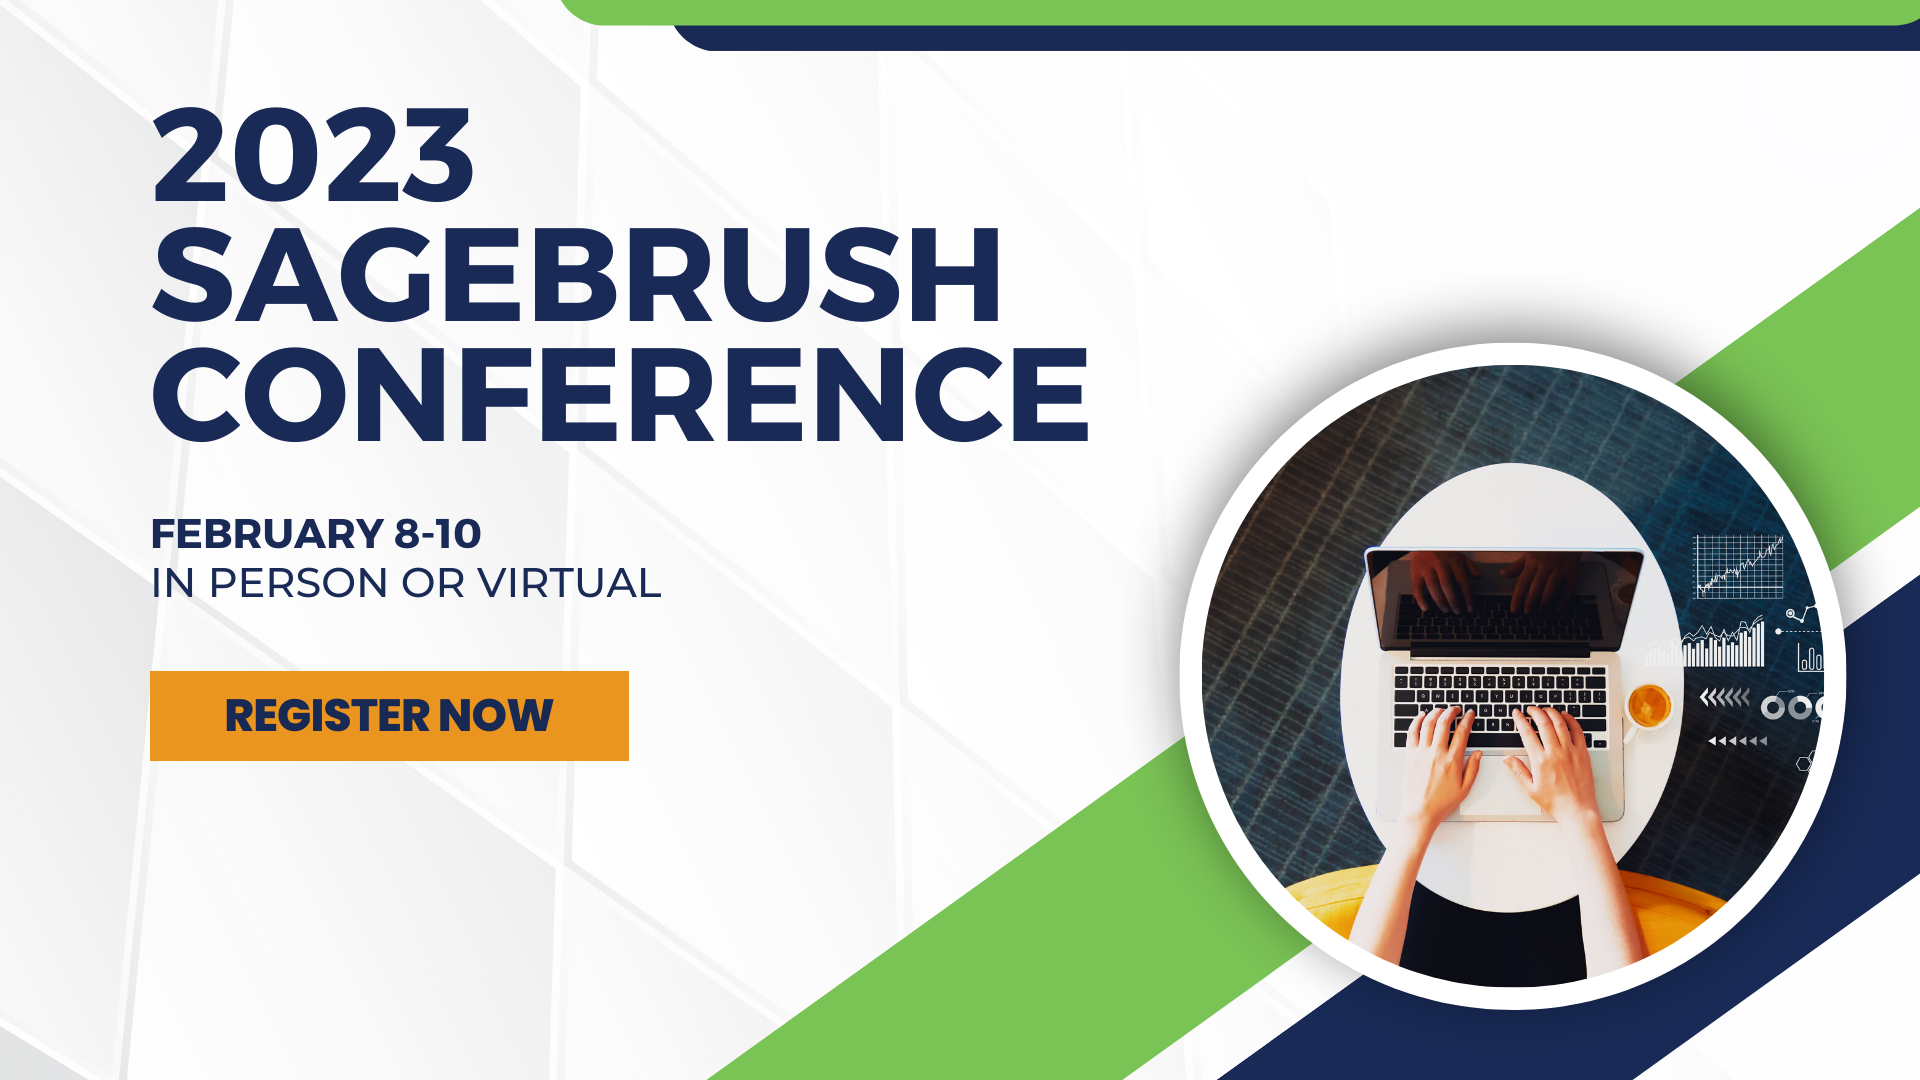 Sagebrush Conference